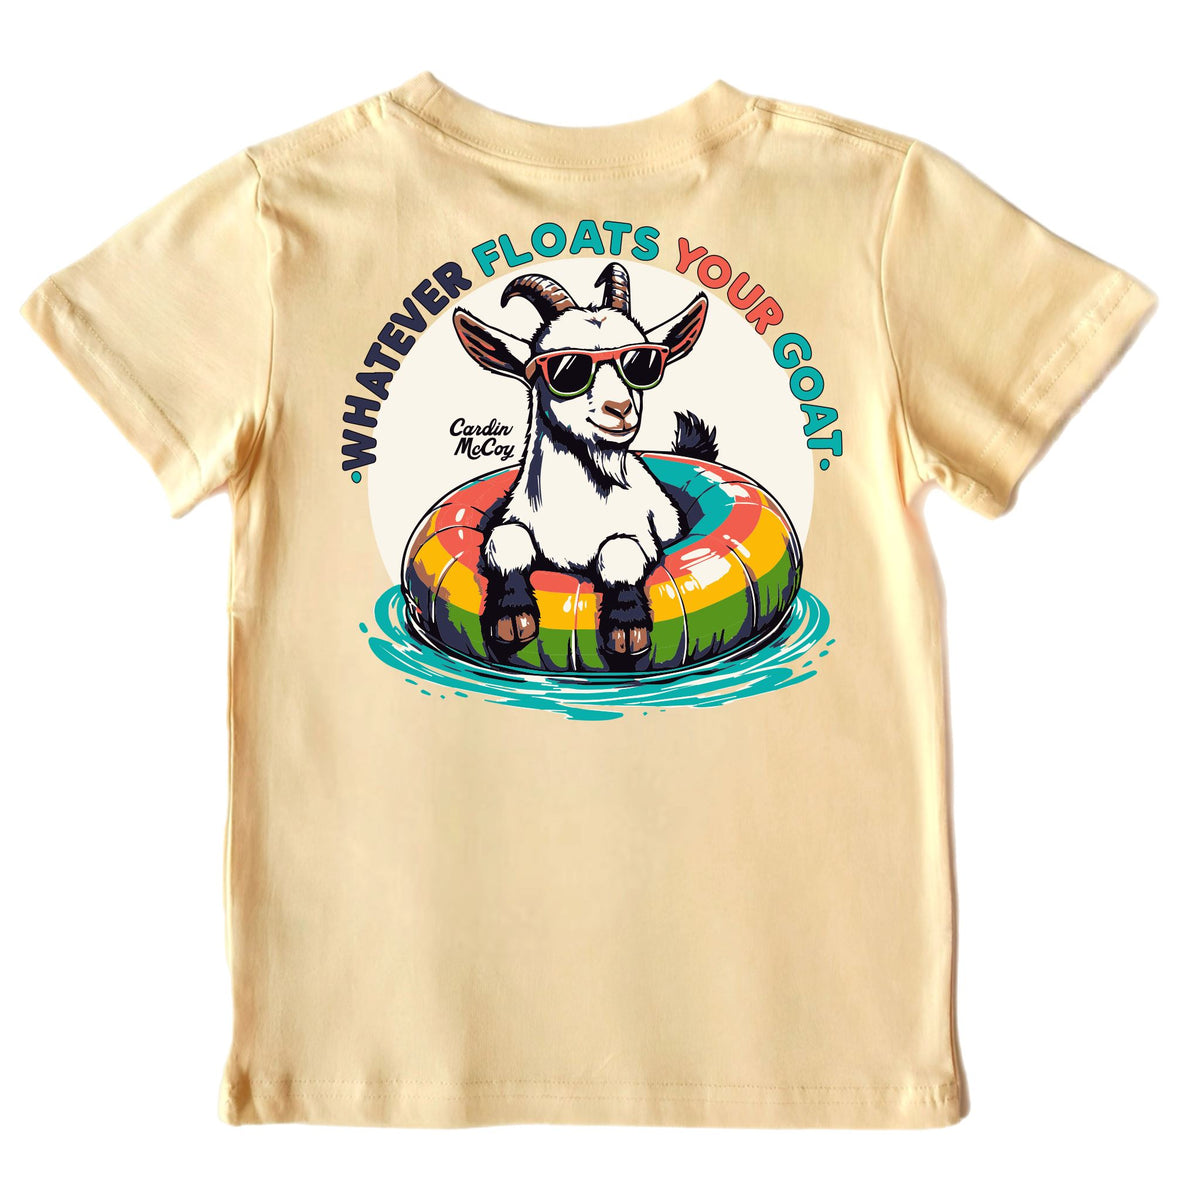 Boys' Floats Your Goat Short-Sleeve Tee Short Sleeve T-Shirt Cardin McCoy Butter XXS (2/3) Pocket